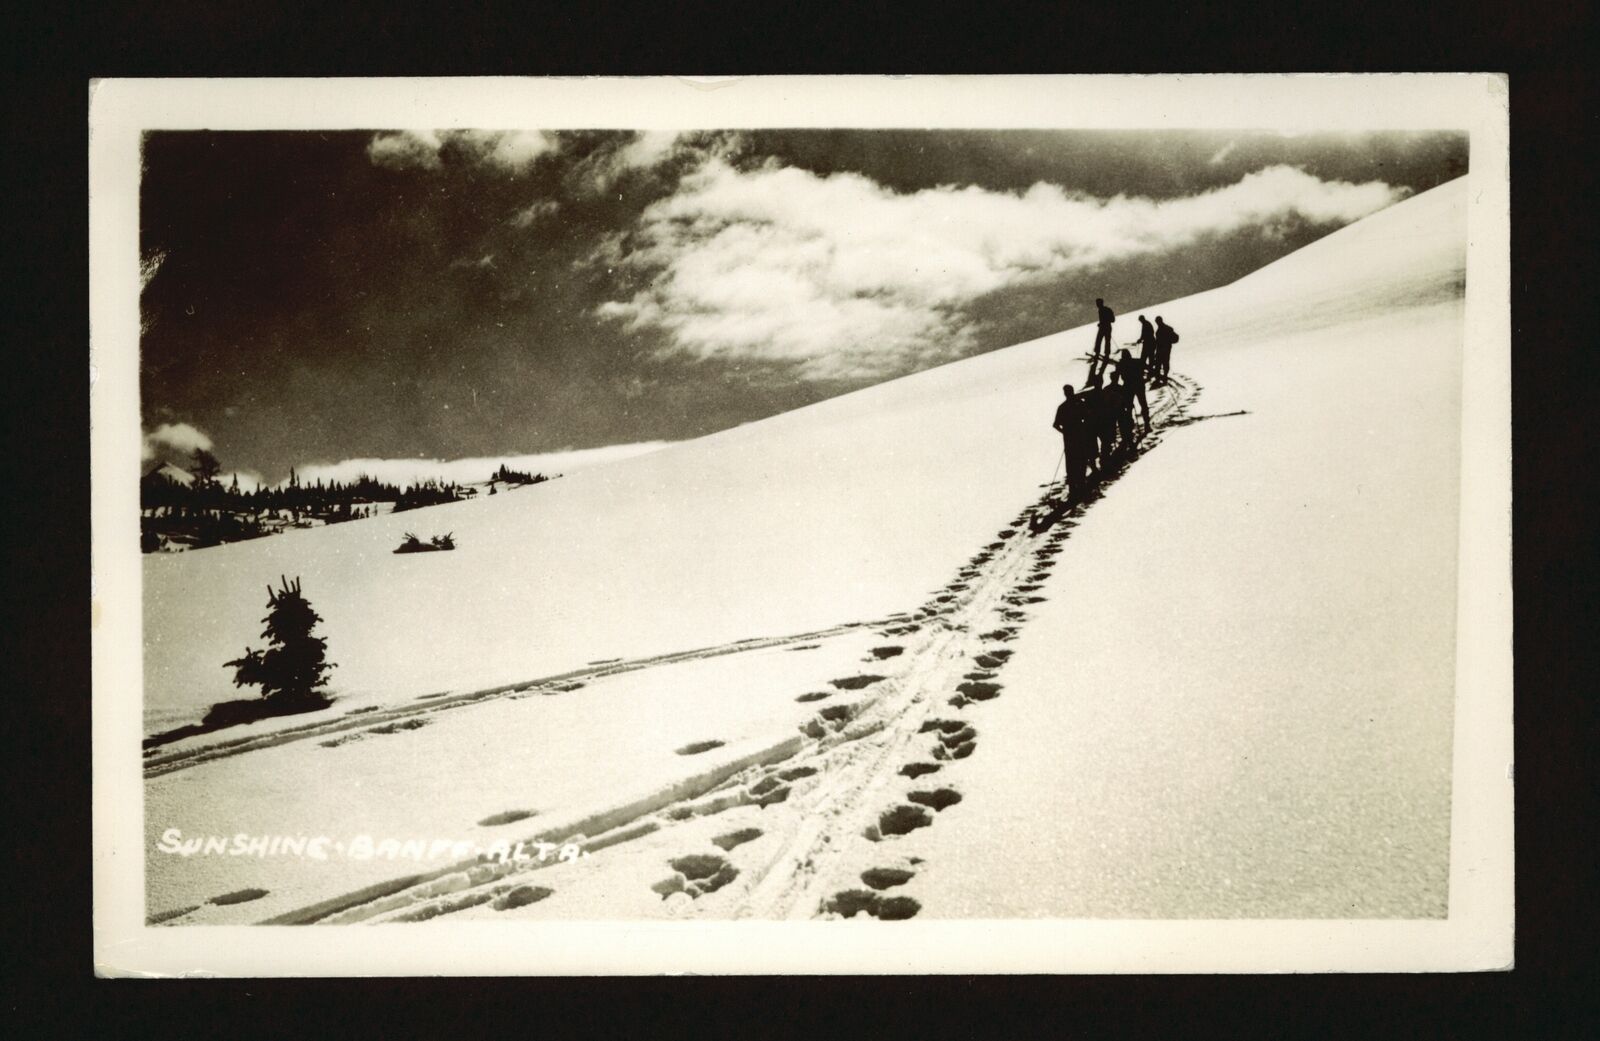 Sunshine Banff Alberta - View of seven men skiing Canada Old Photo